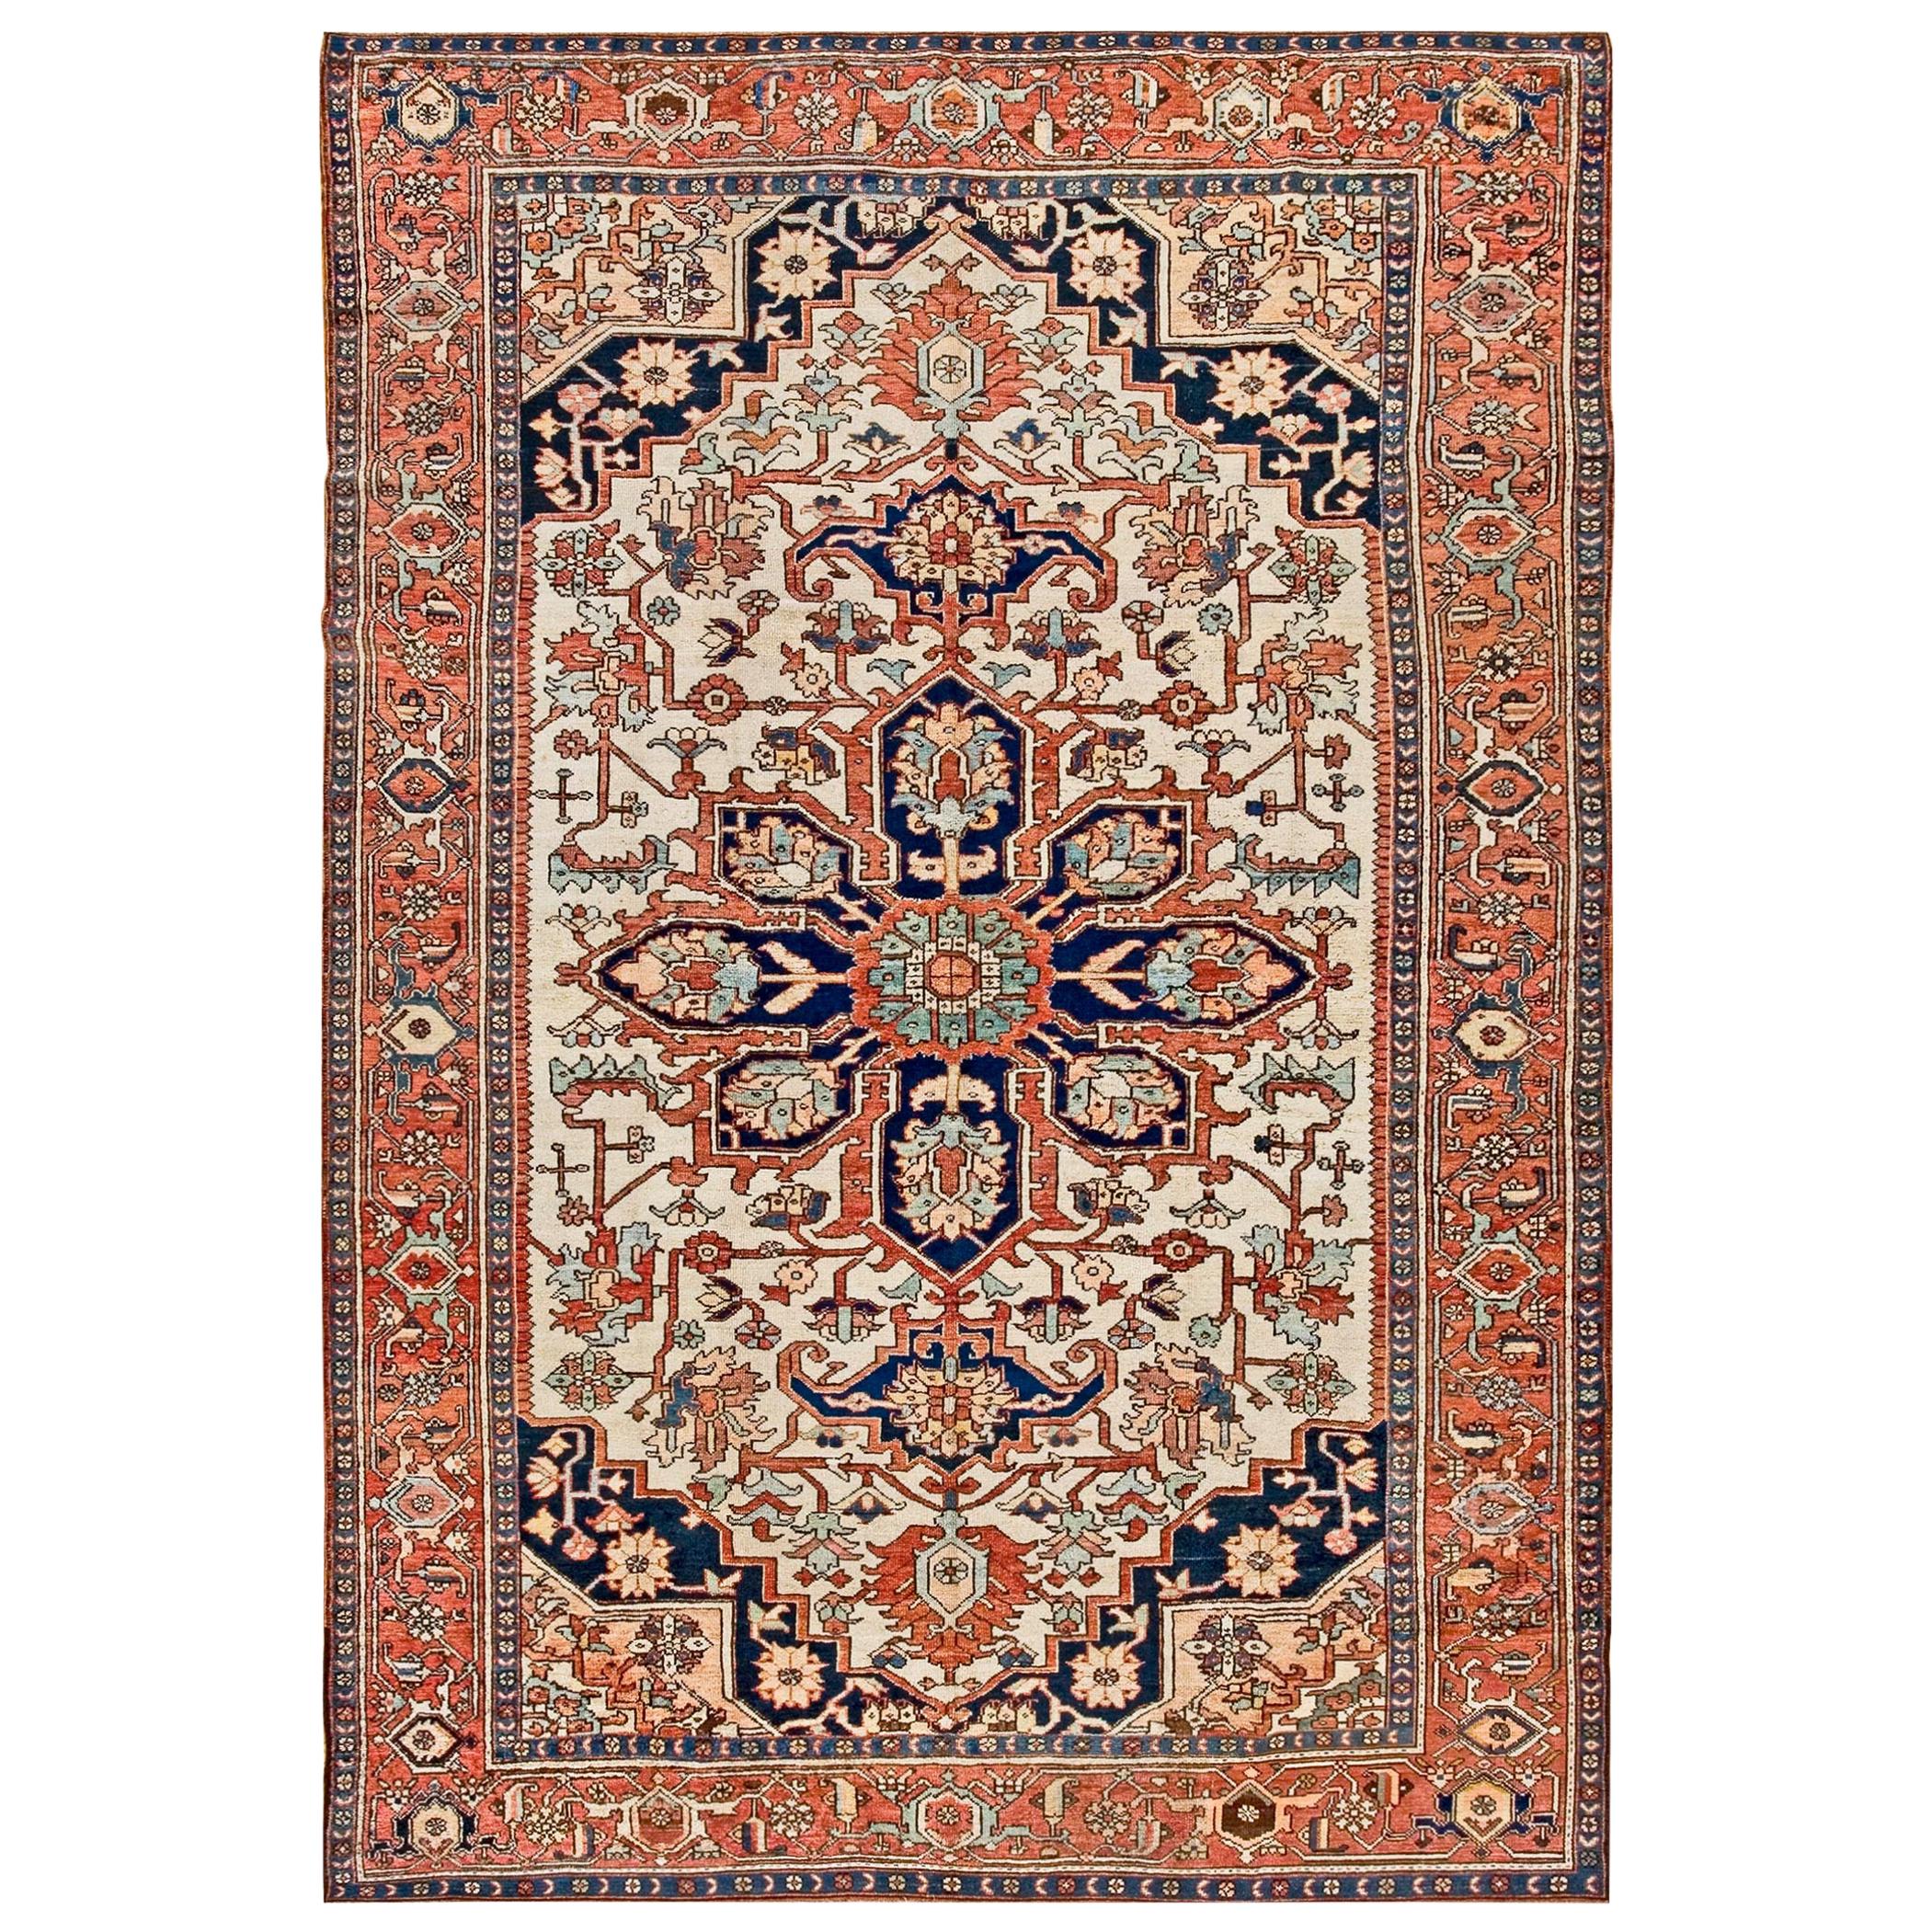 Late 19th Century N.W. Persian Serapi Carpet ( 8'10" x 12'9" - 270 x 388 )